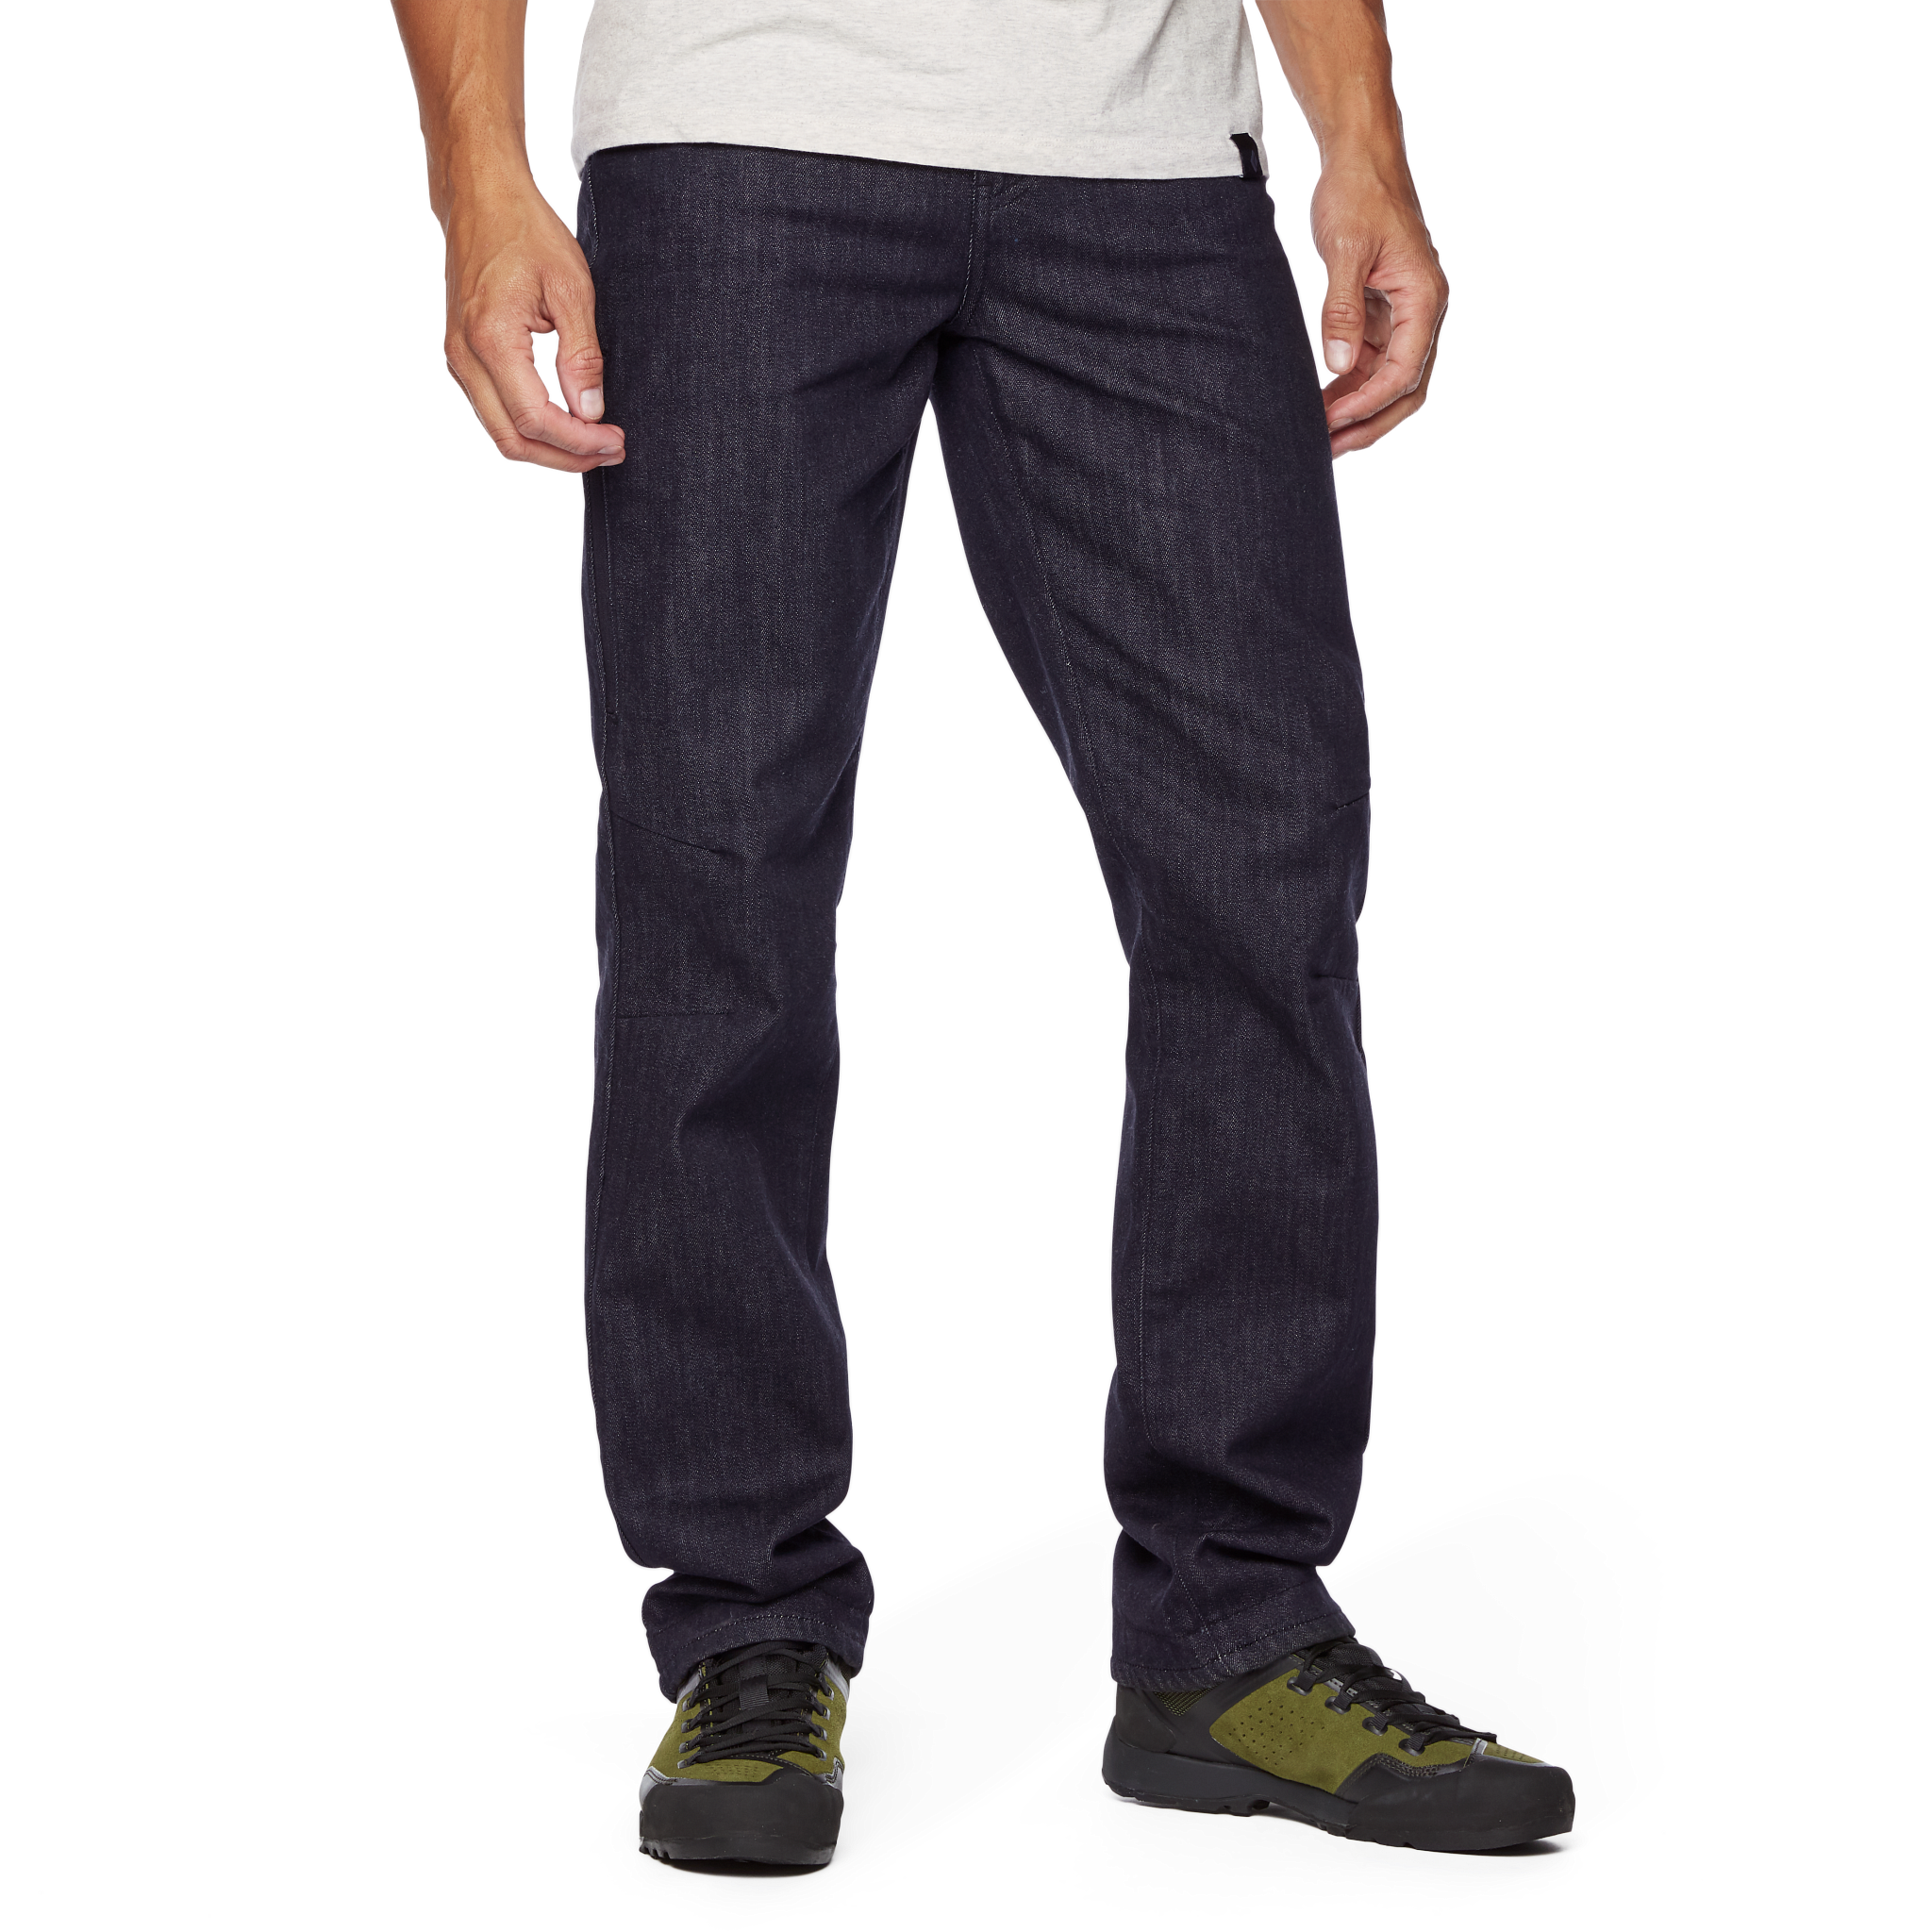 Black Diamond Equipment Men's Mission Wool Denim Pants Size 33, in Dark Grey